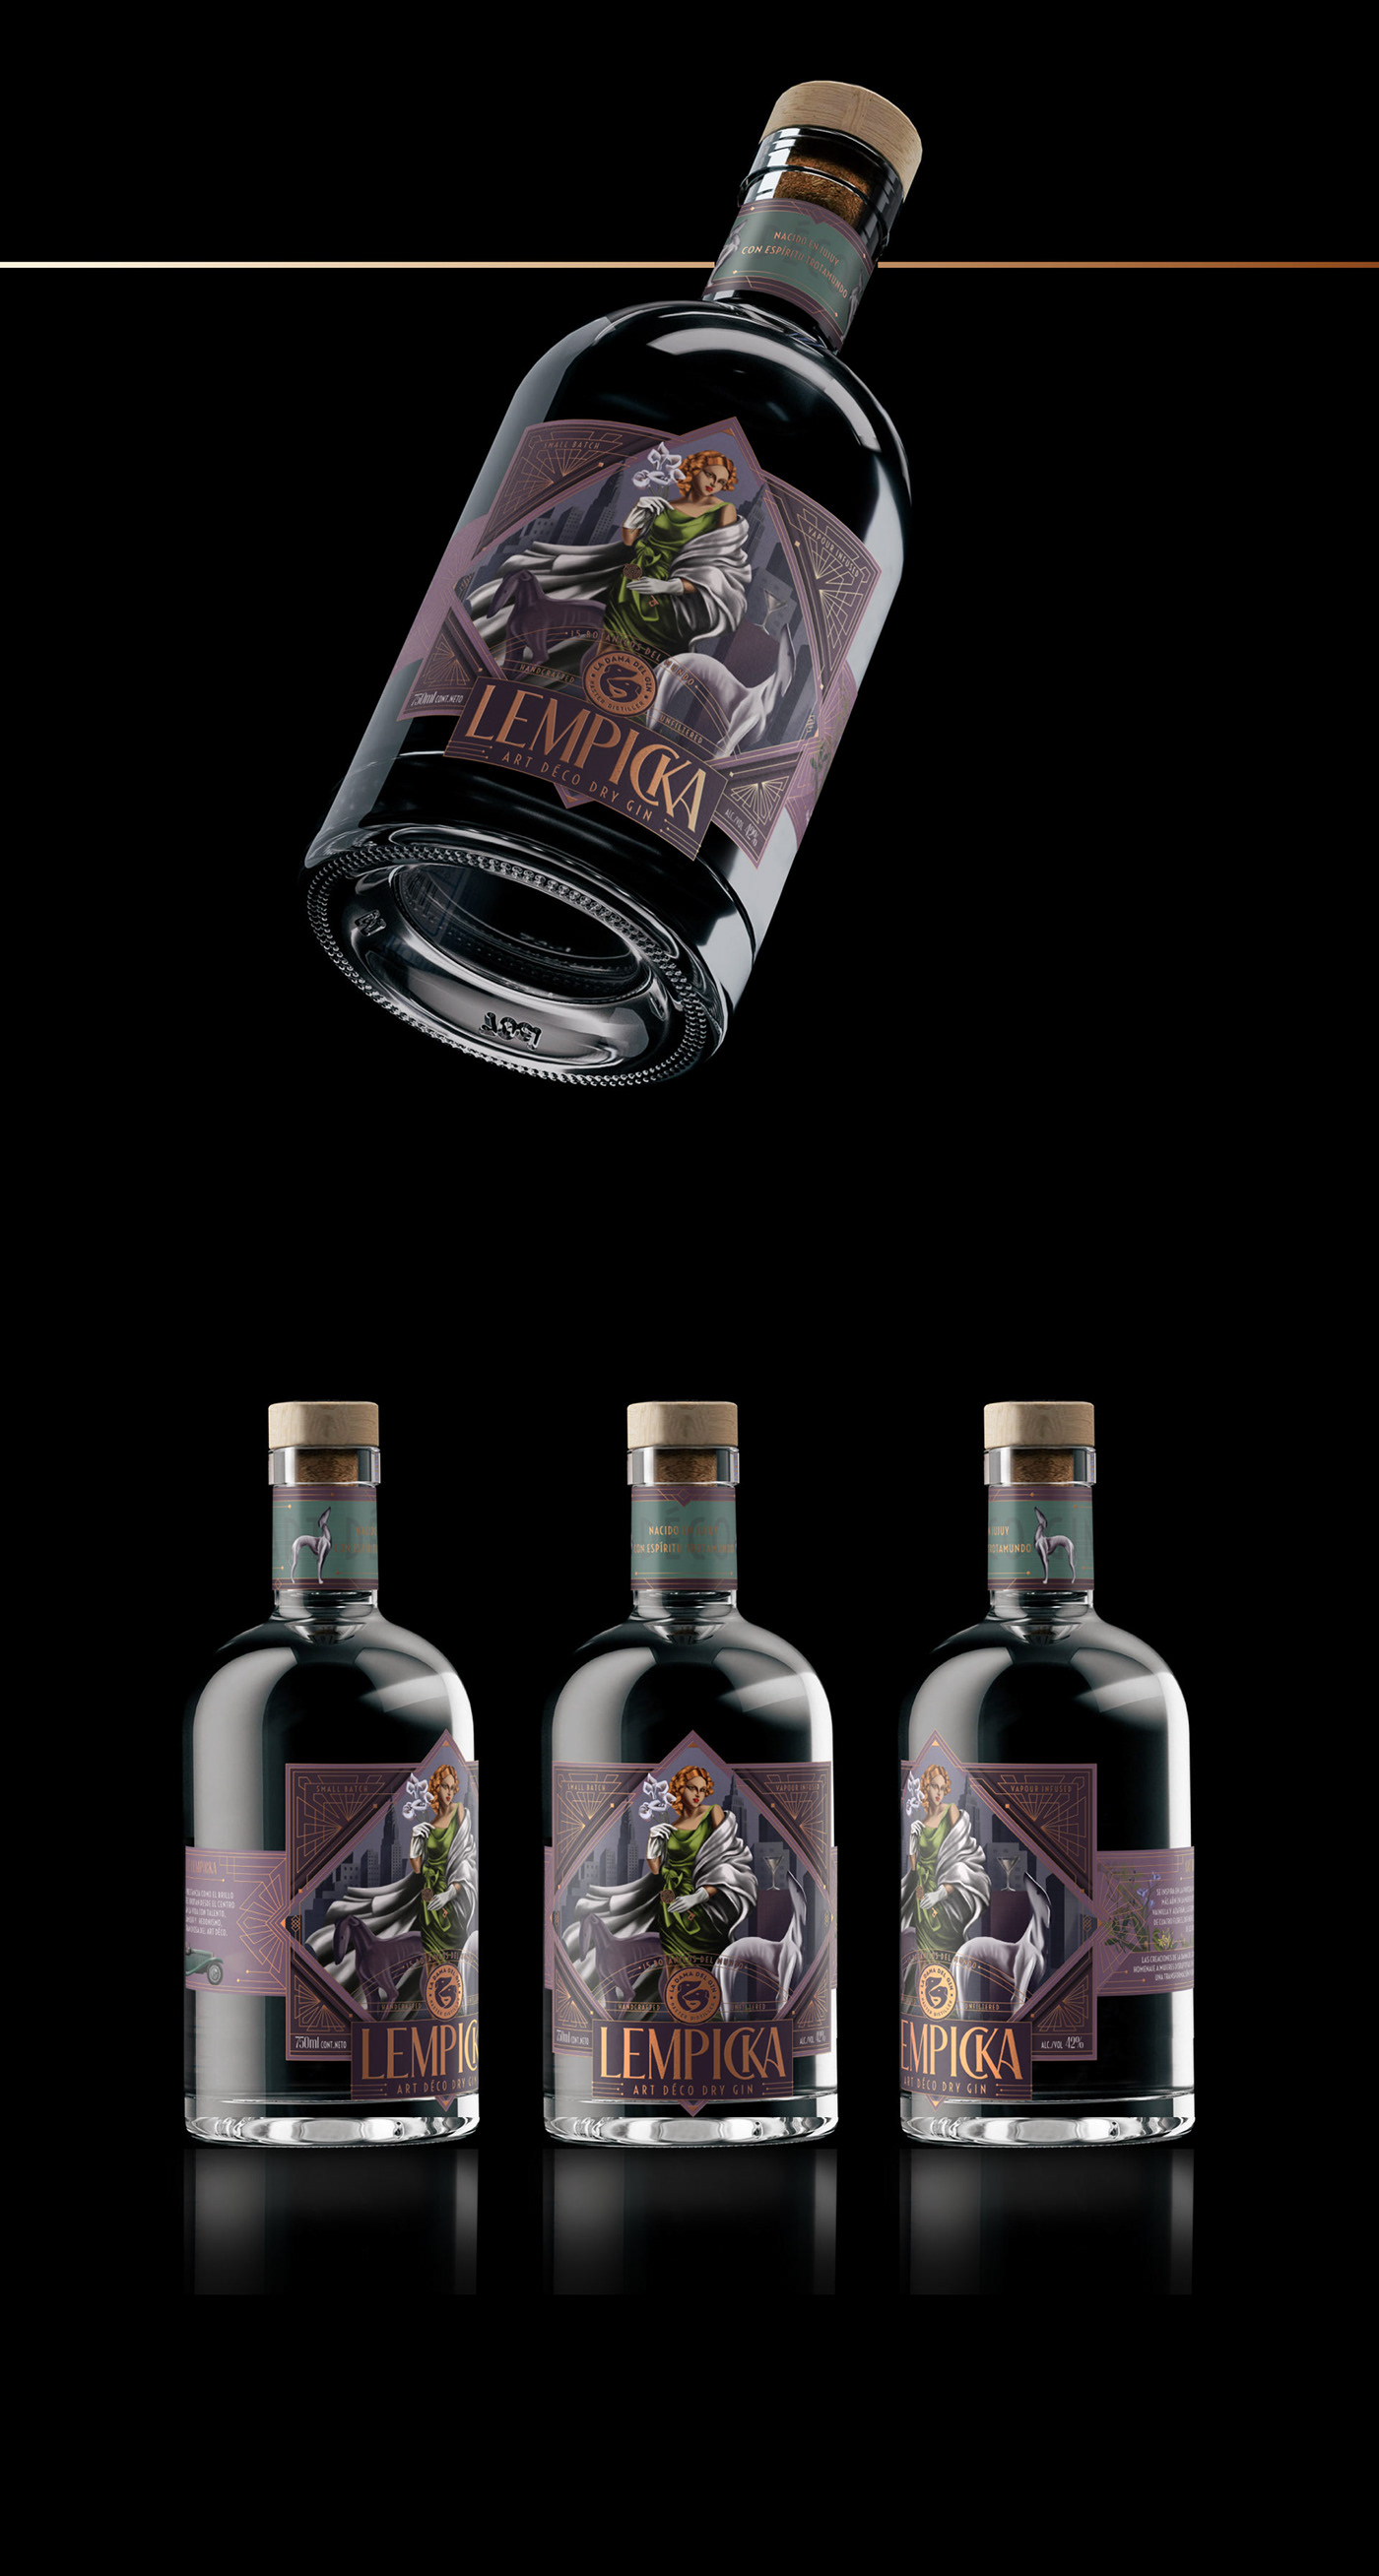 art deco gin Label label design Label gin lempicka package design  Packaging painting   Tamara de Lempicka